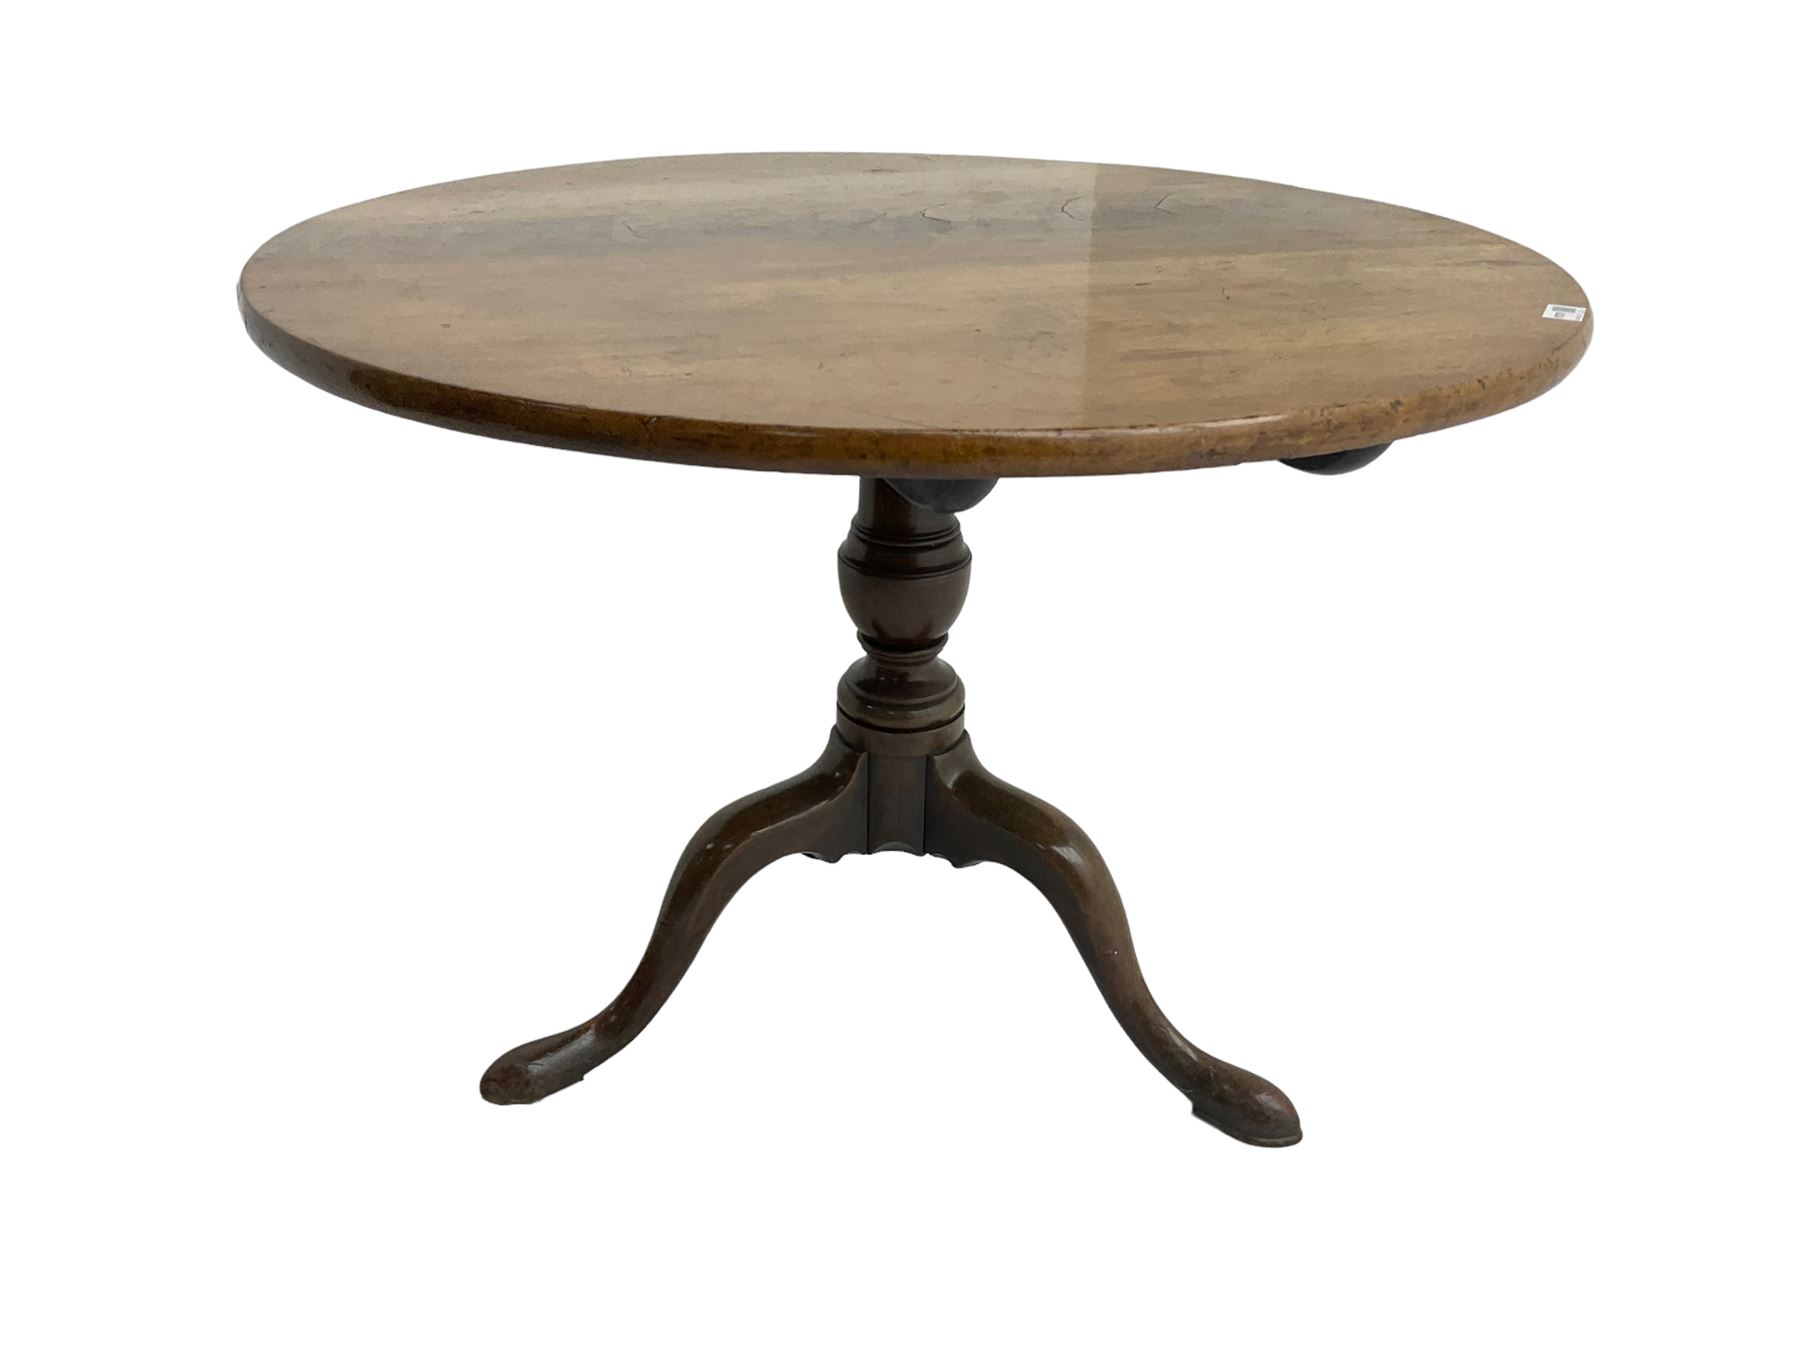 19th century mahogany pedestal table - Image 2 of 4